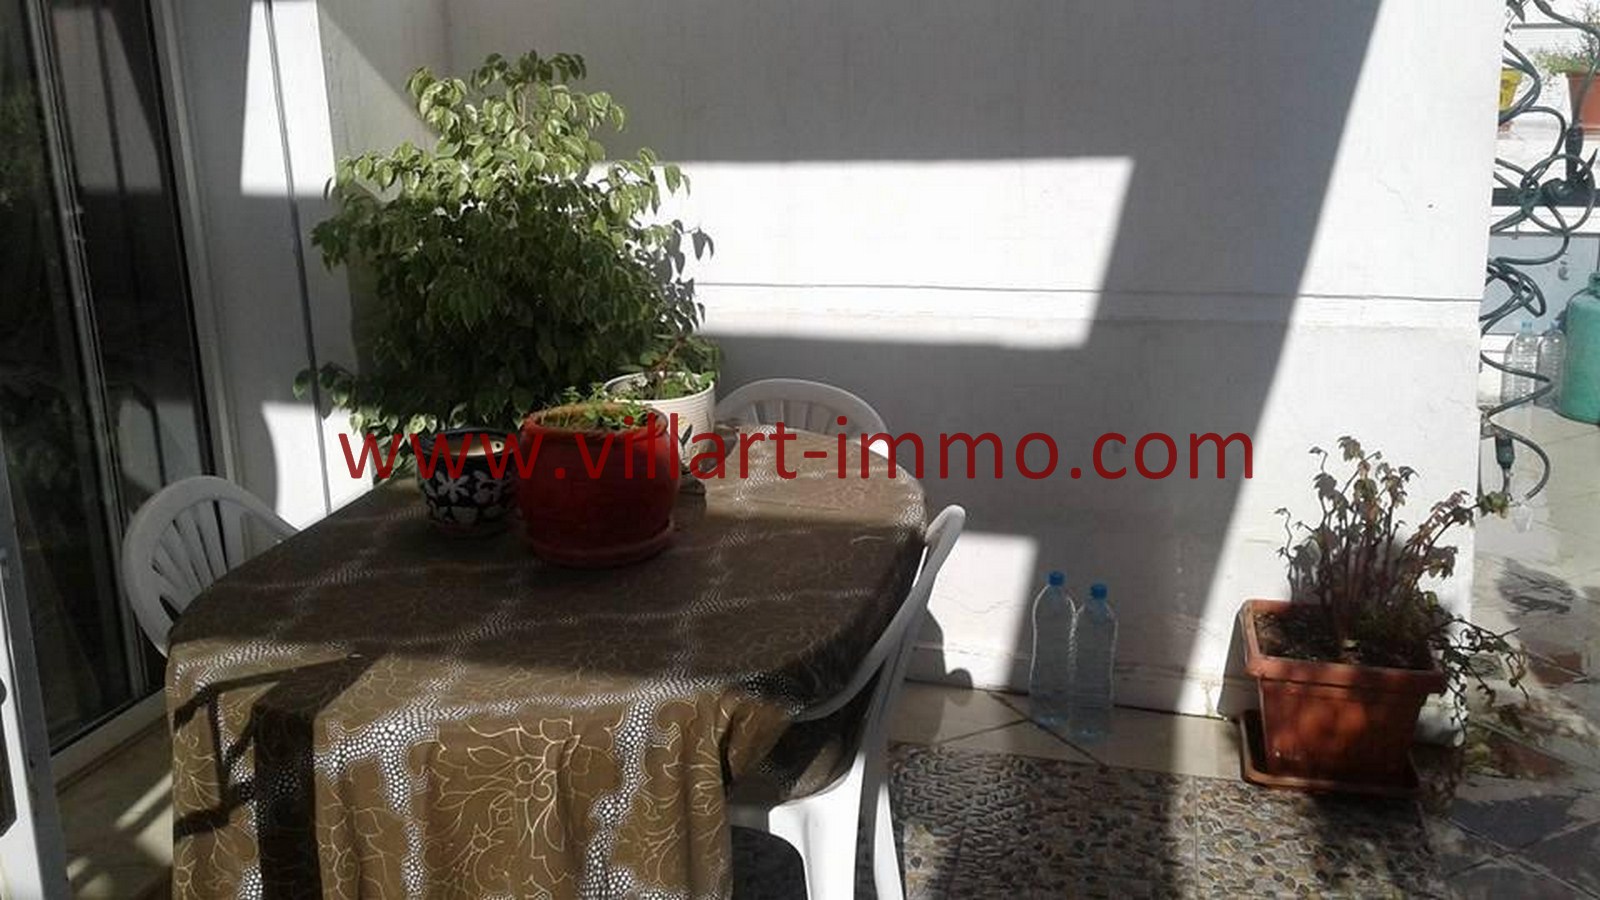 3-Vente-Appartement-Tanger-Route-de-Rabat-Terrasse 1 -VA476-Villart Immo